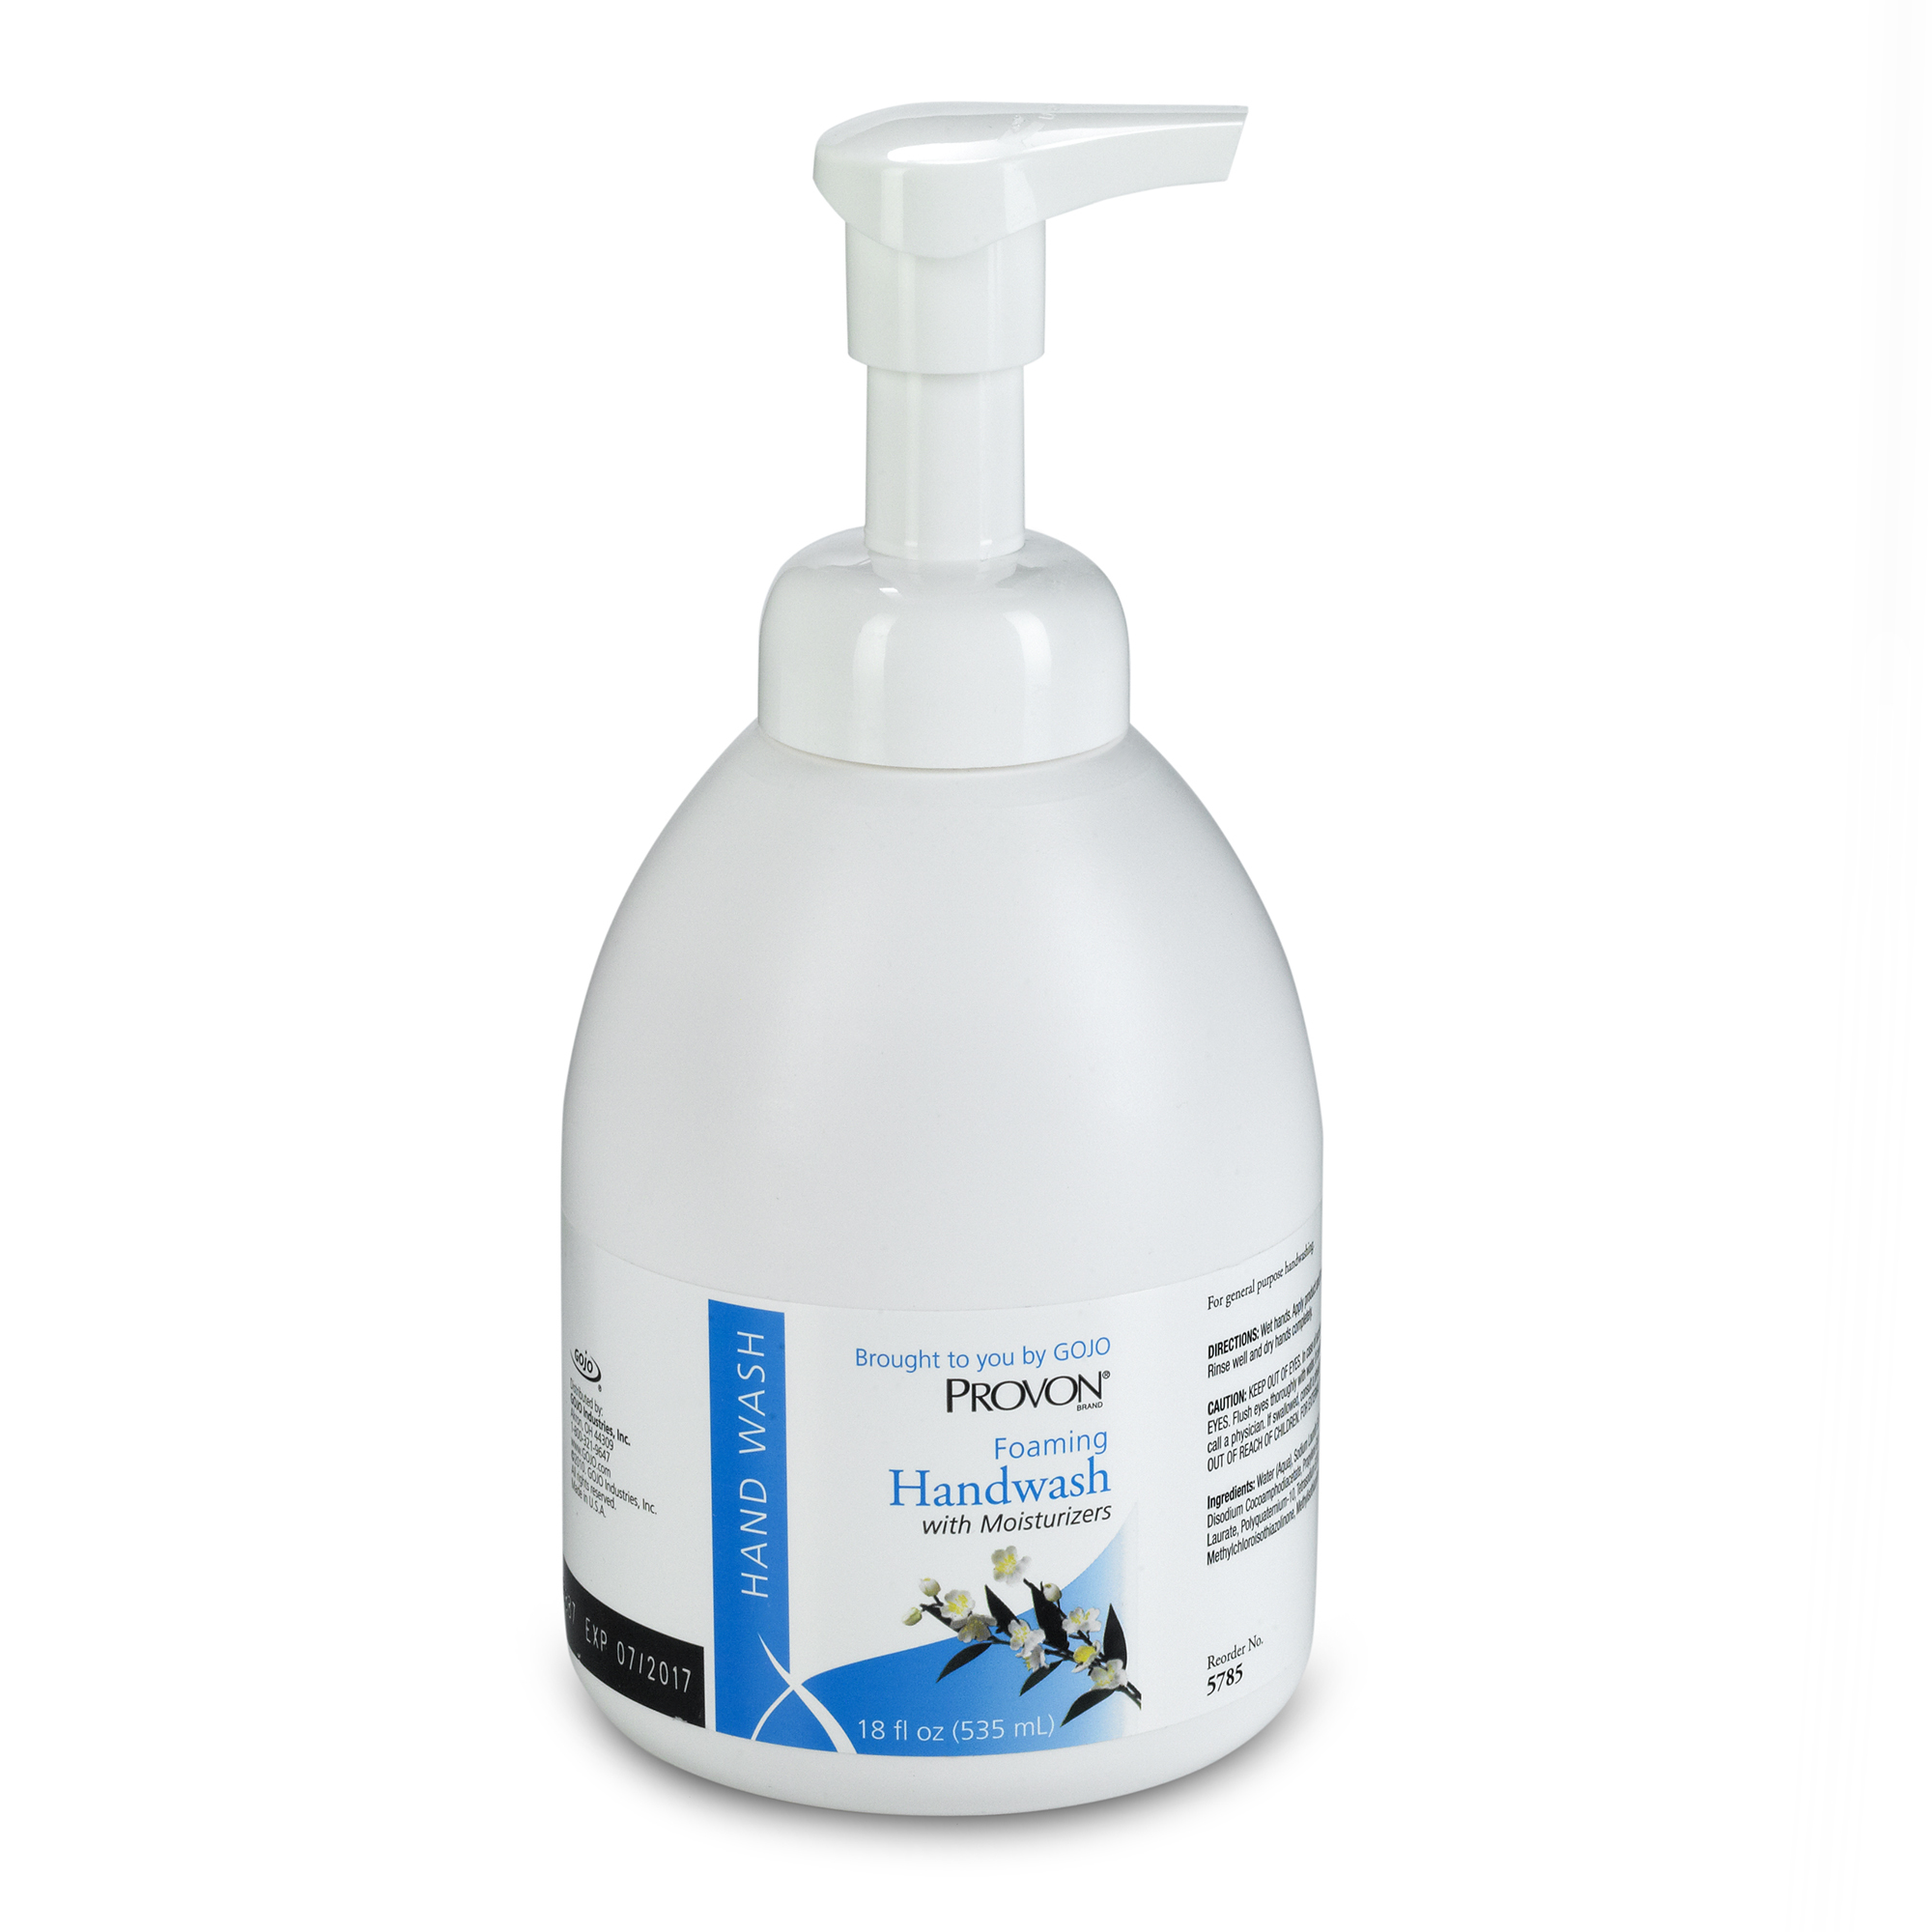 PROVON® Foaming Handwash with Moisturizers 535 mL